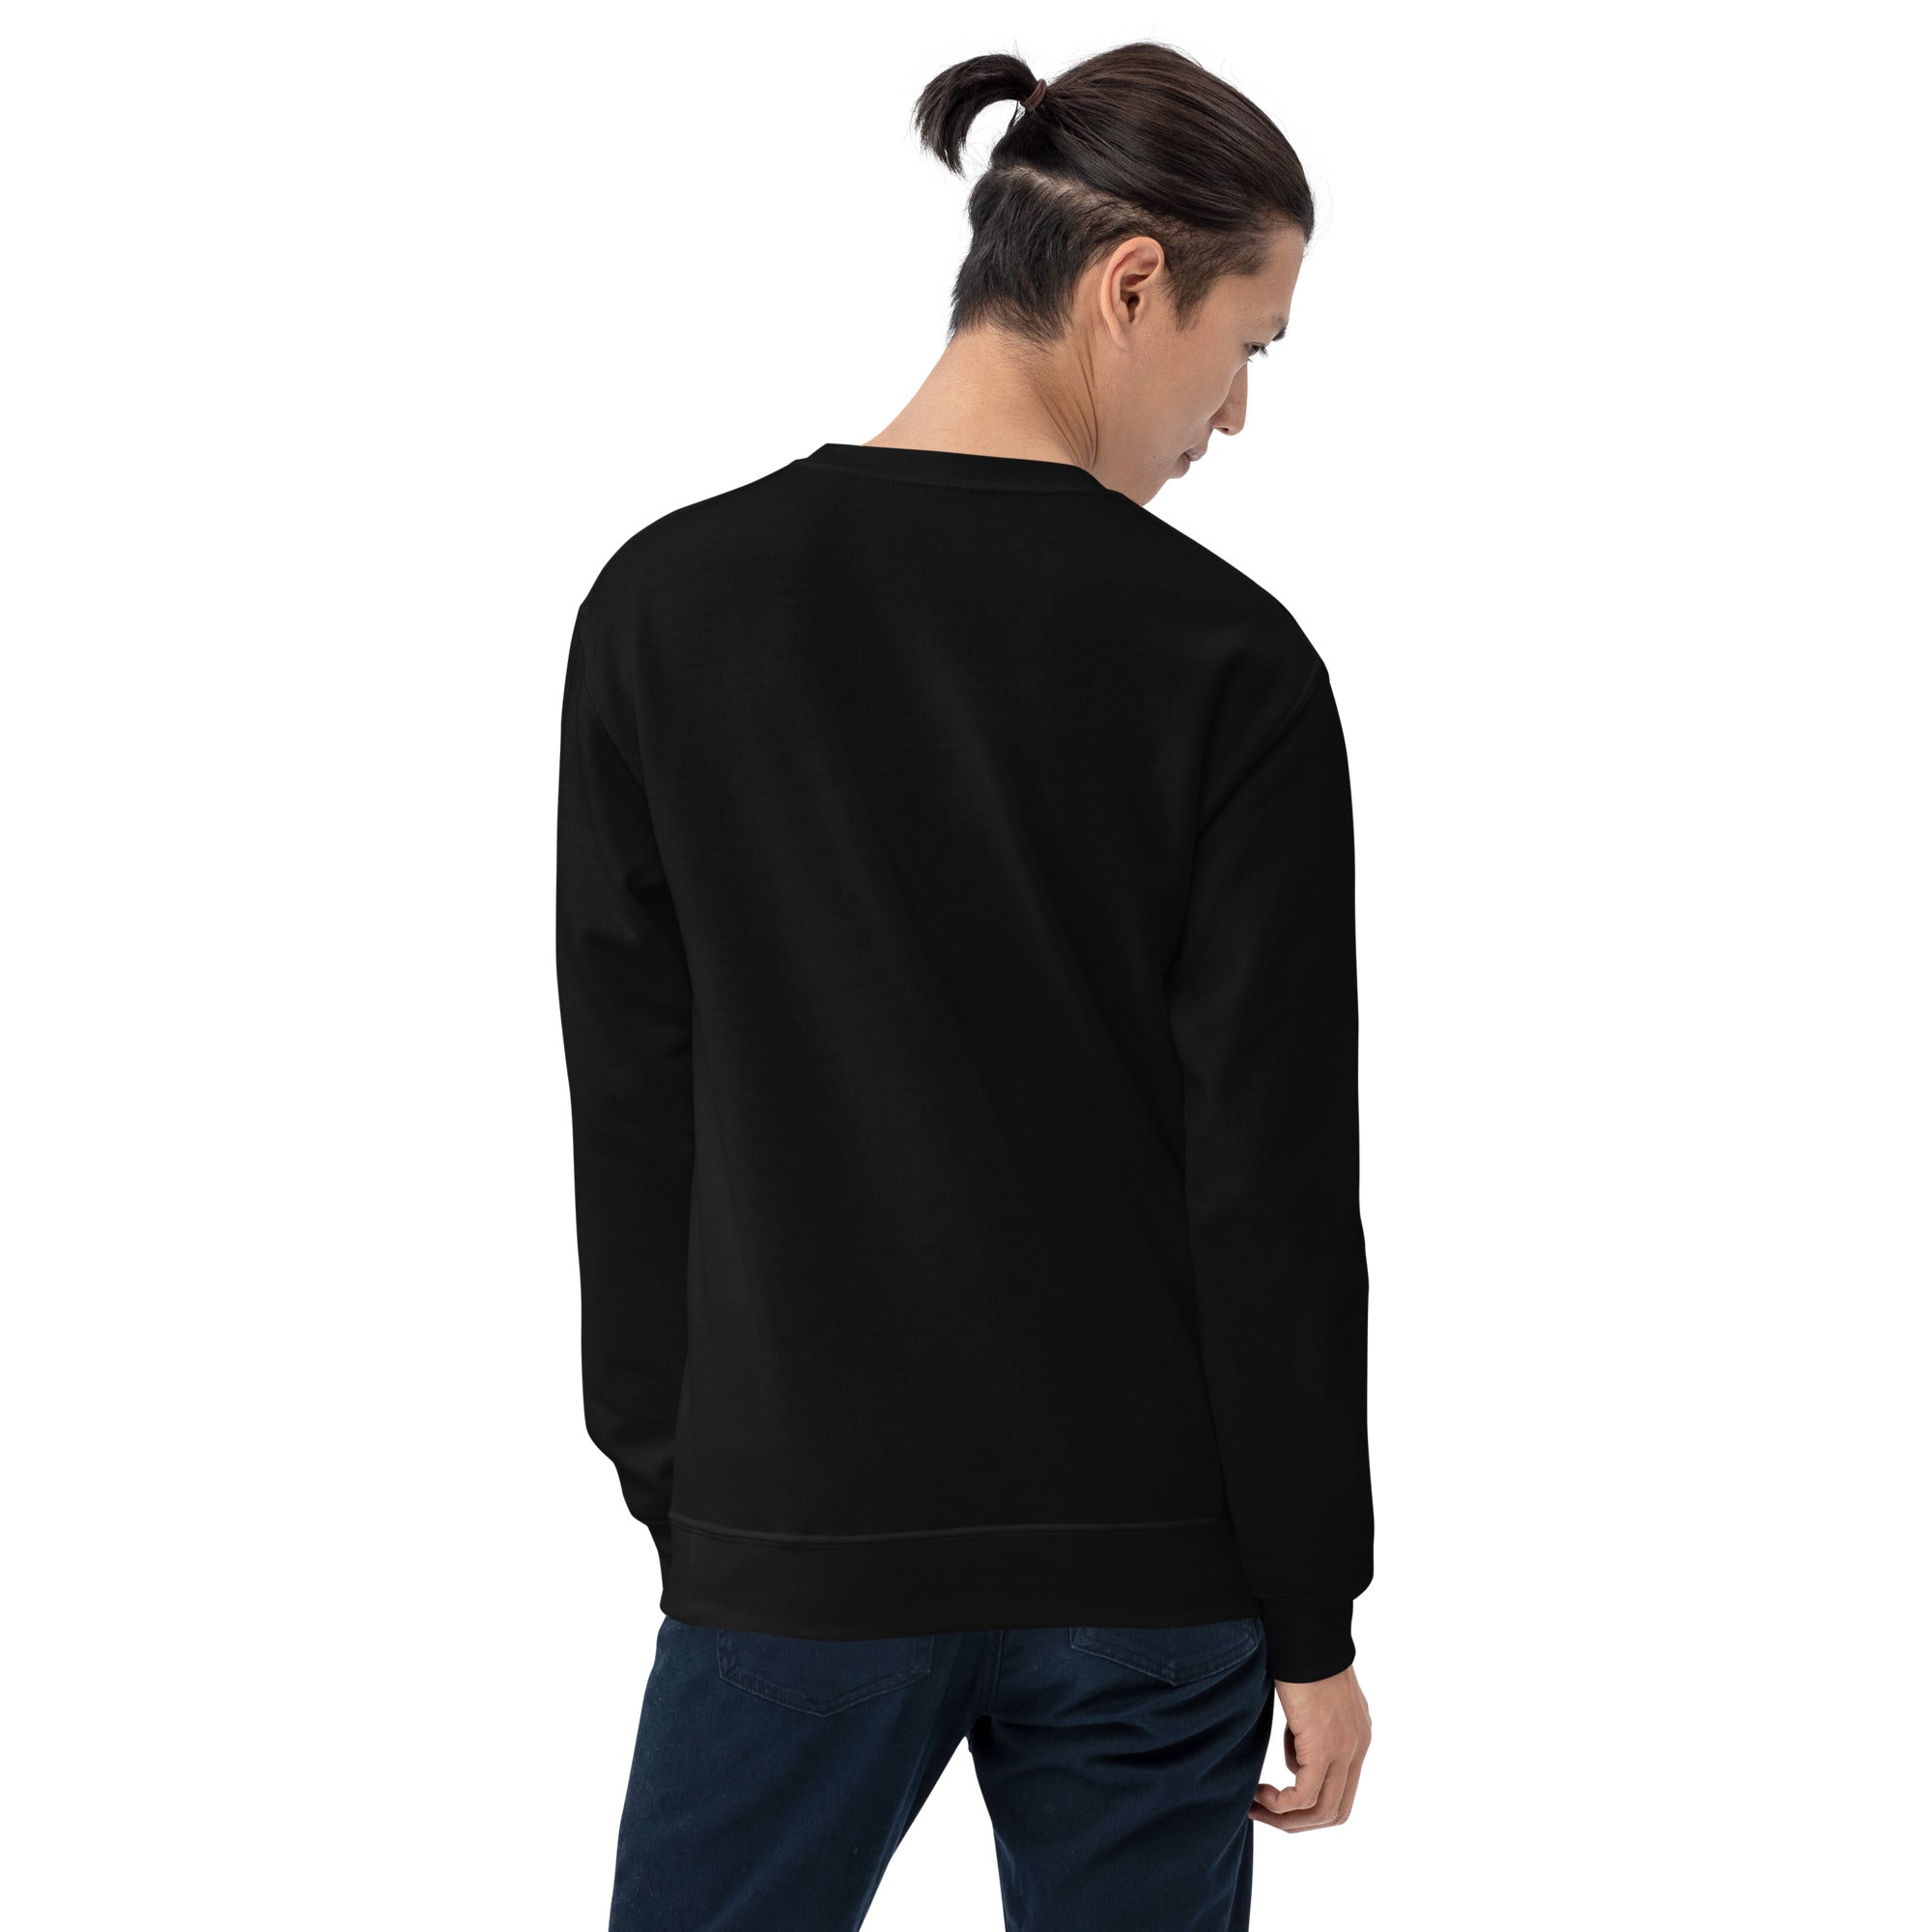 Crypto Bull Run Buy Sell Bitcoin Long Sleeve Pullover Sweatshirt